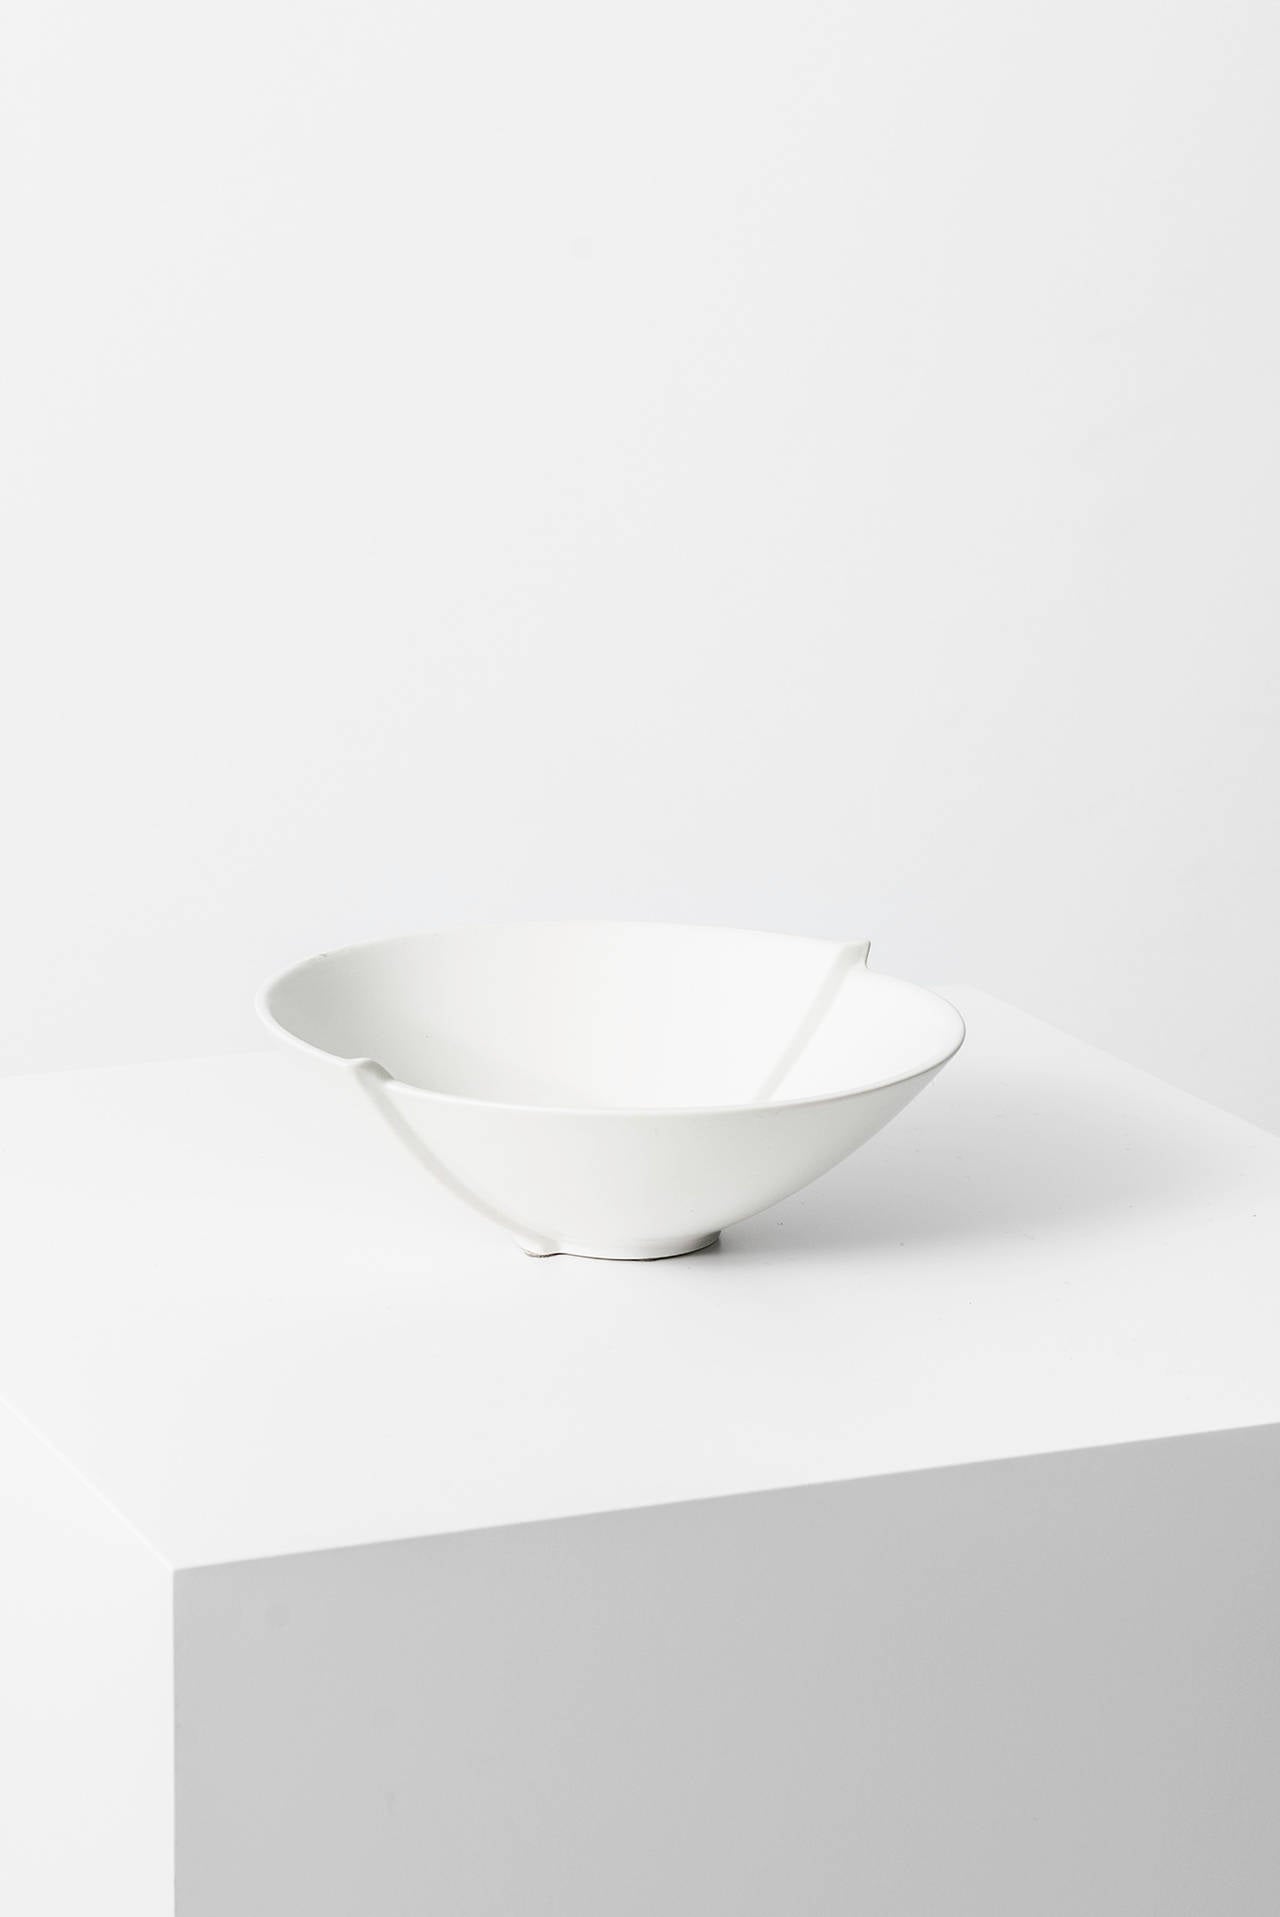 Swedish Wilhelm Kåge Ceramic Bowl Model Surrea by Gustavsberg in Sweden For Sale